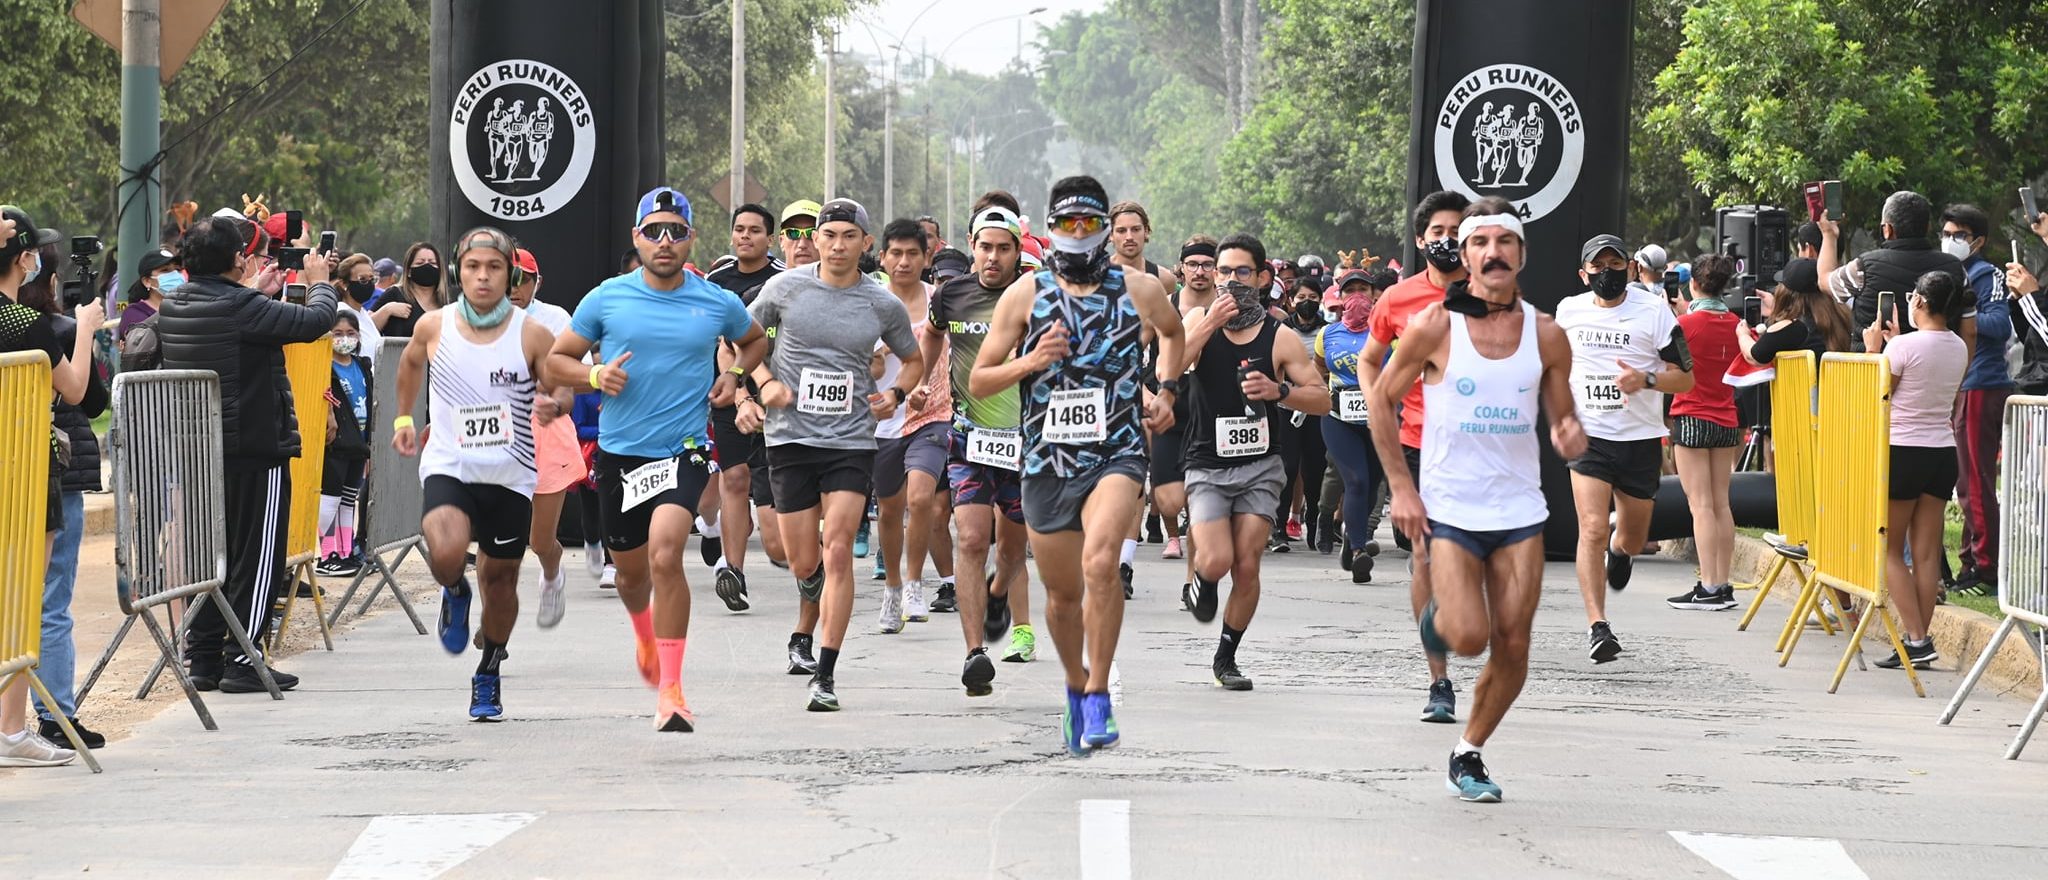 Carreras Perú - 5 CONSEJOS PARA ELEGIR TU GEL ENERGÉTICO #Running #Runners  #CarrerasPeru : : : ✓ Síguenos: /carrerasperu 👉  instagram.com/carrerasperu 🏃🏃‍♀️ COMUNIDAD RUNNERS PERÚ 🇵🇪